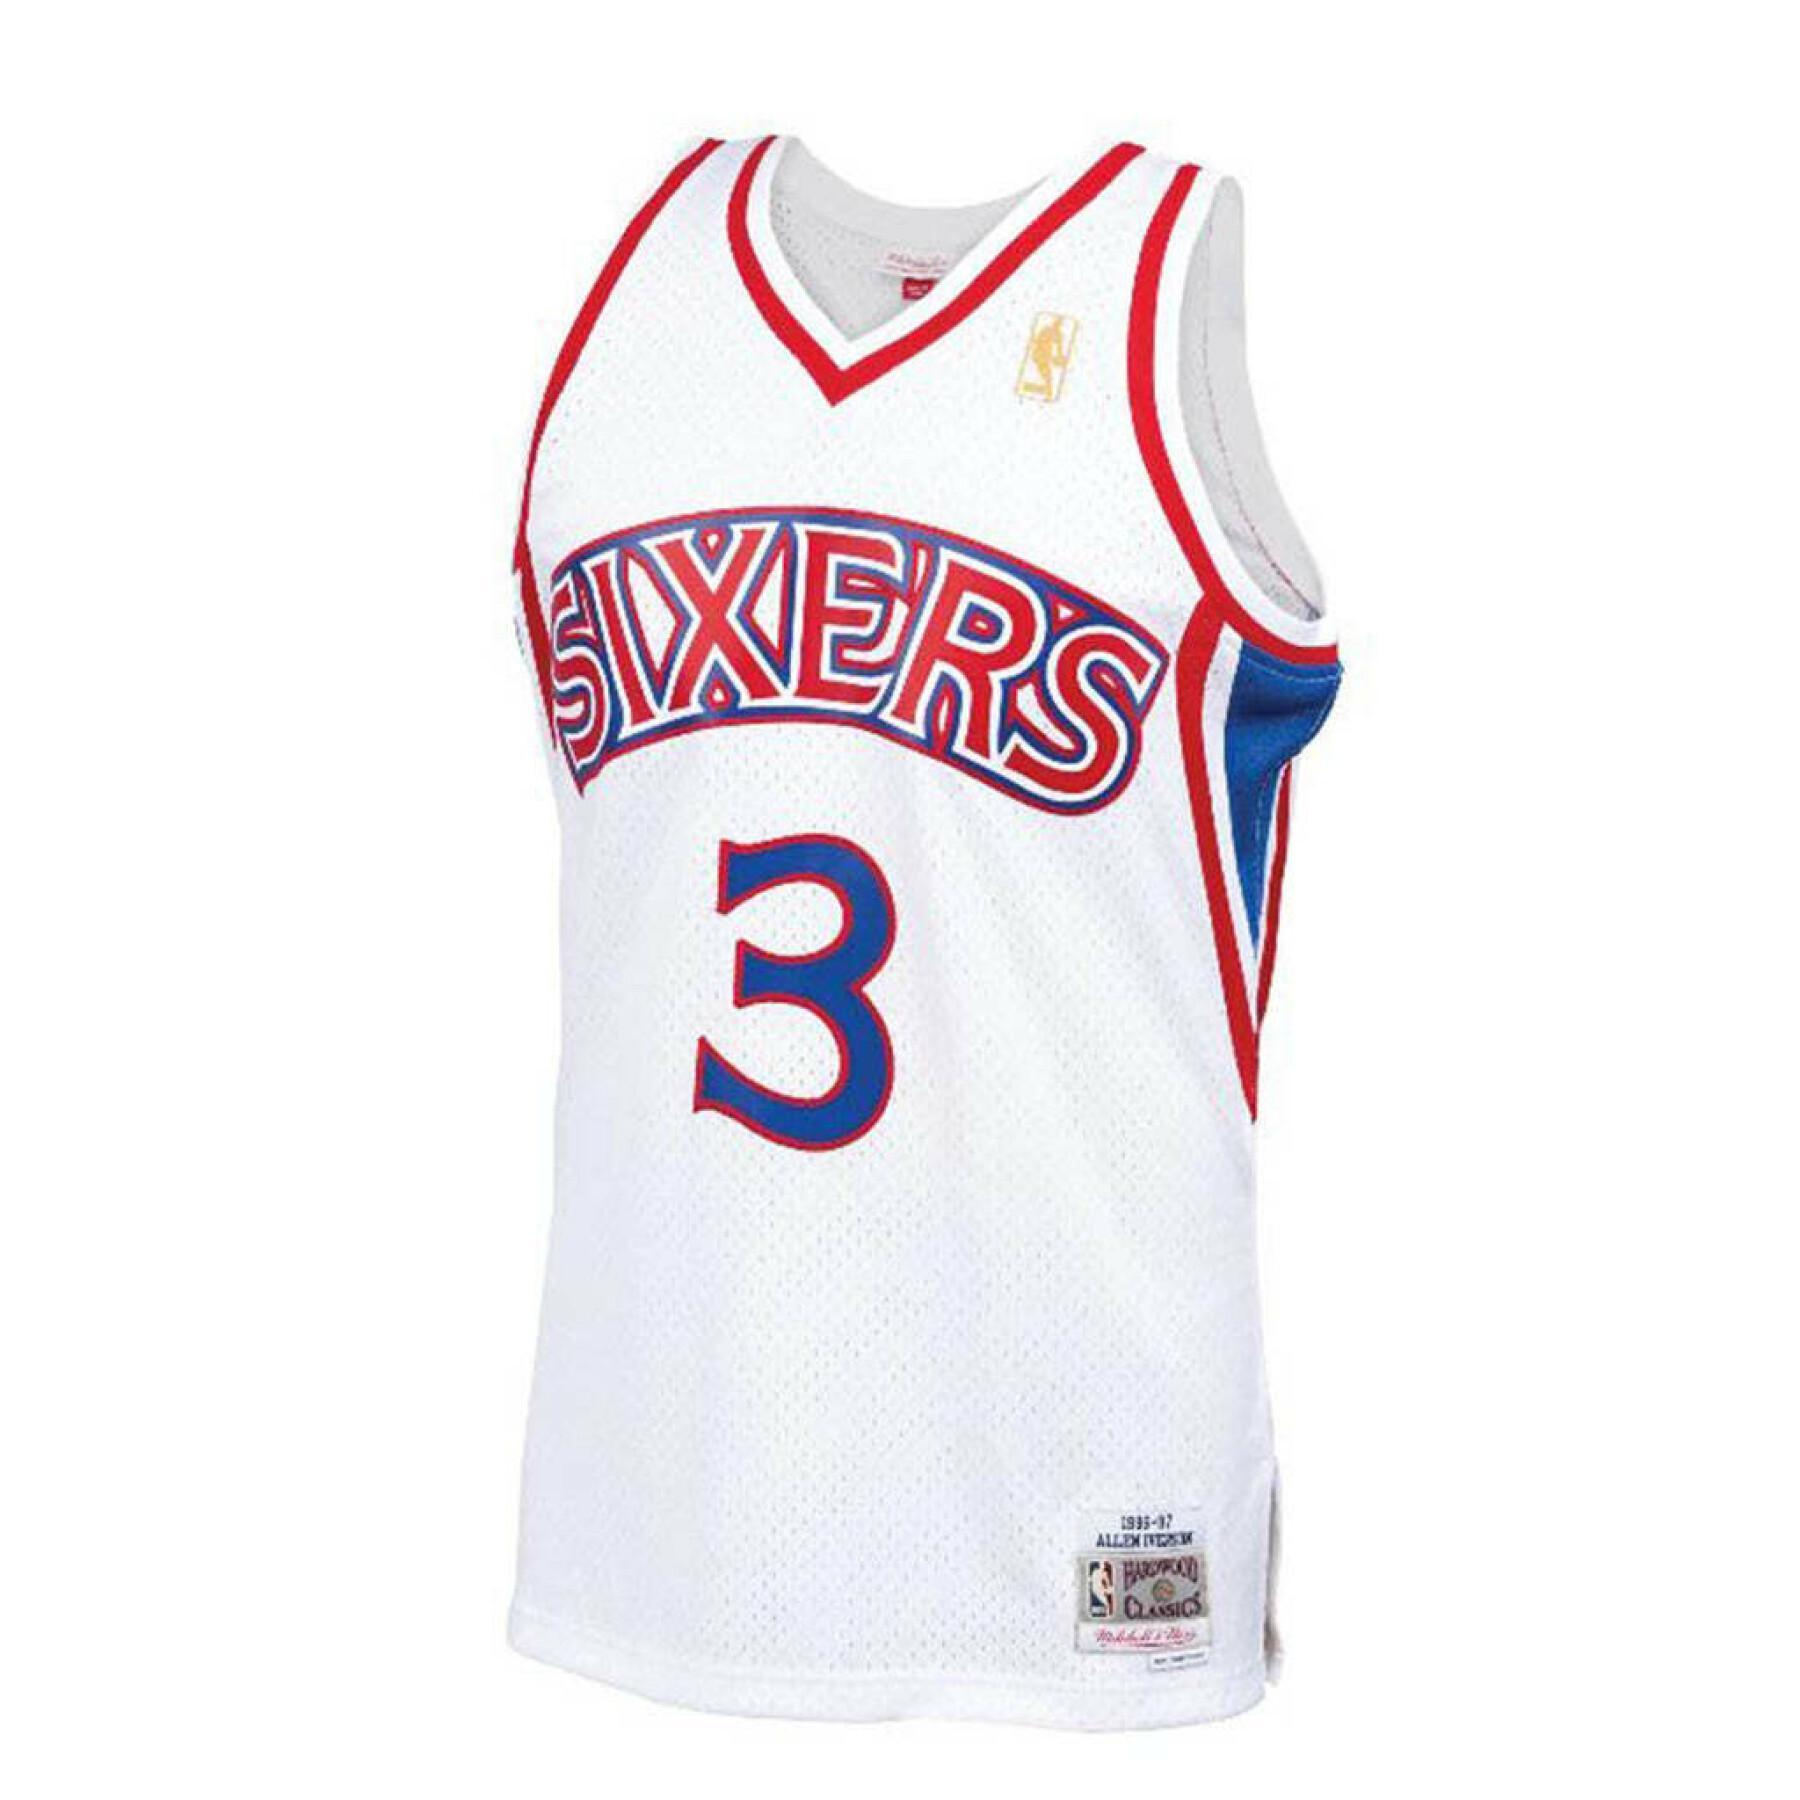 Camiseta de casa Philadelphia 76ers nba authentic Allen Iverson